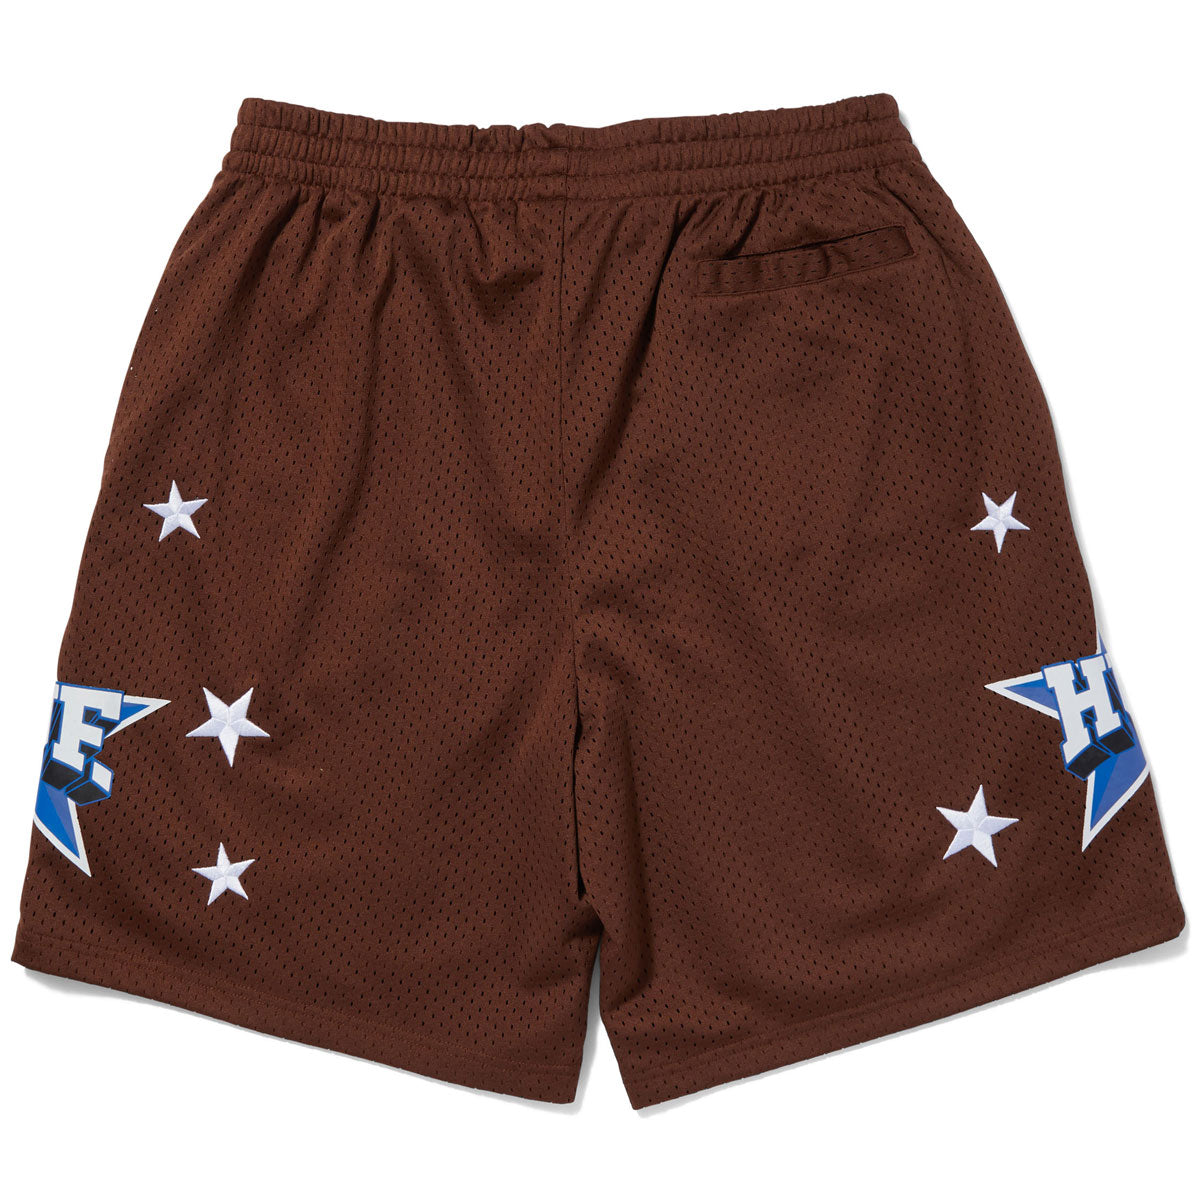 HUF All Star Basketball Shorts - Brown image 2